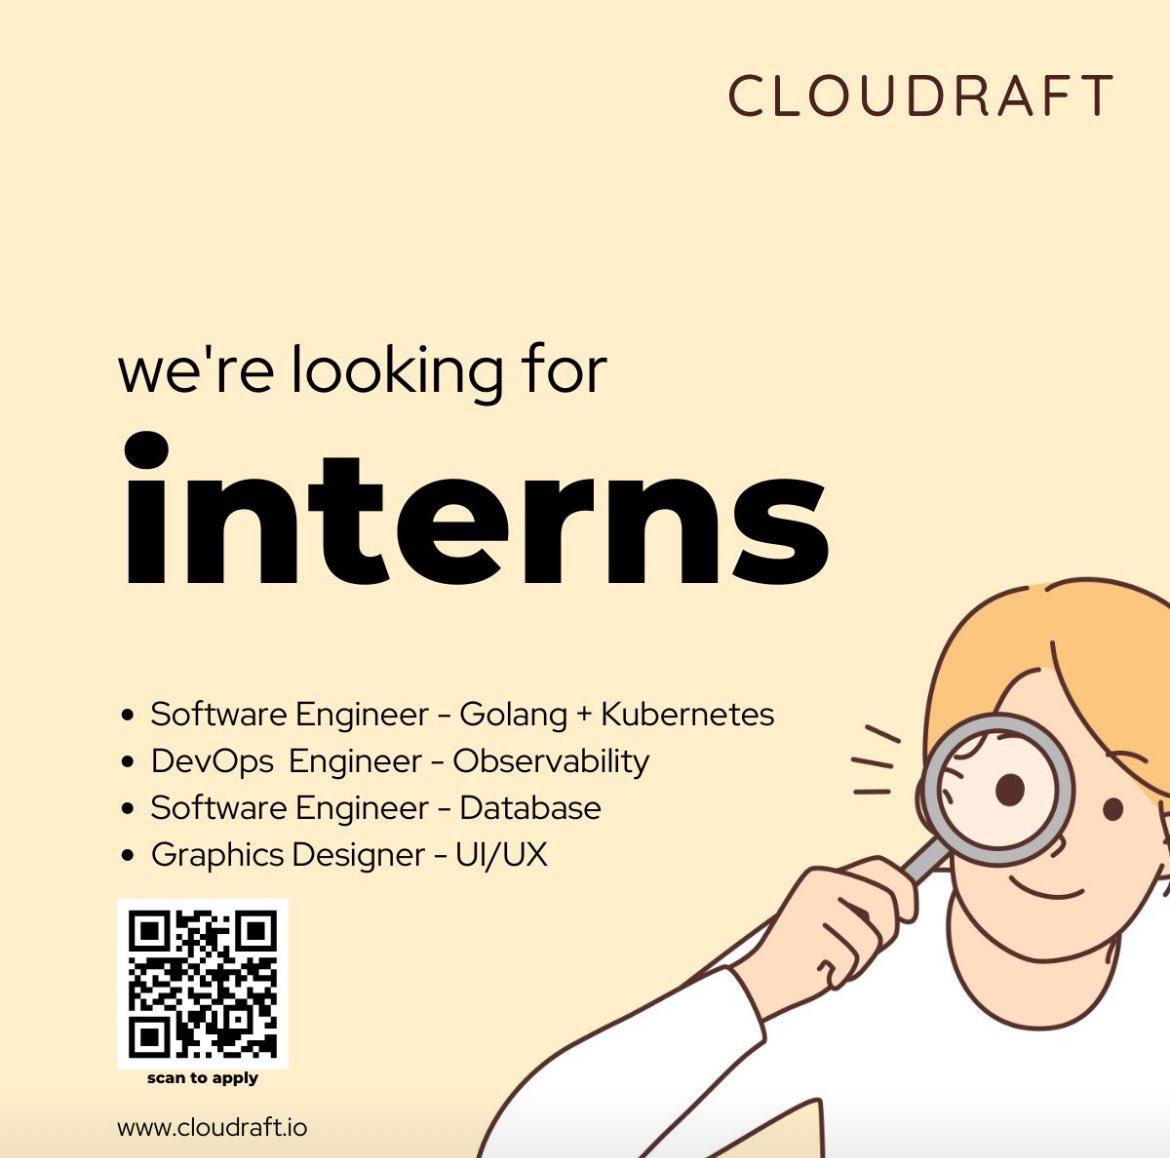 CloudRaft is looking for Interns in various tracks: 

1. Software Engineer - Golang + Kubernetes + System design skills
2. Software Engineer - Databases - PostgreSQL, Clickhouse etc
3. DevOps - Observability skills
4. Graphics Design - UI/UX

Apply : tally.so/r/3XrPWV